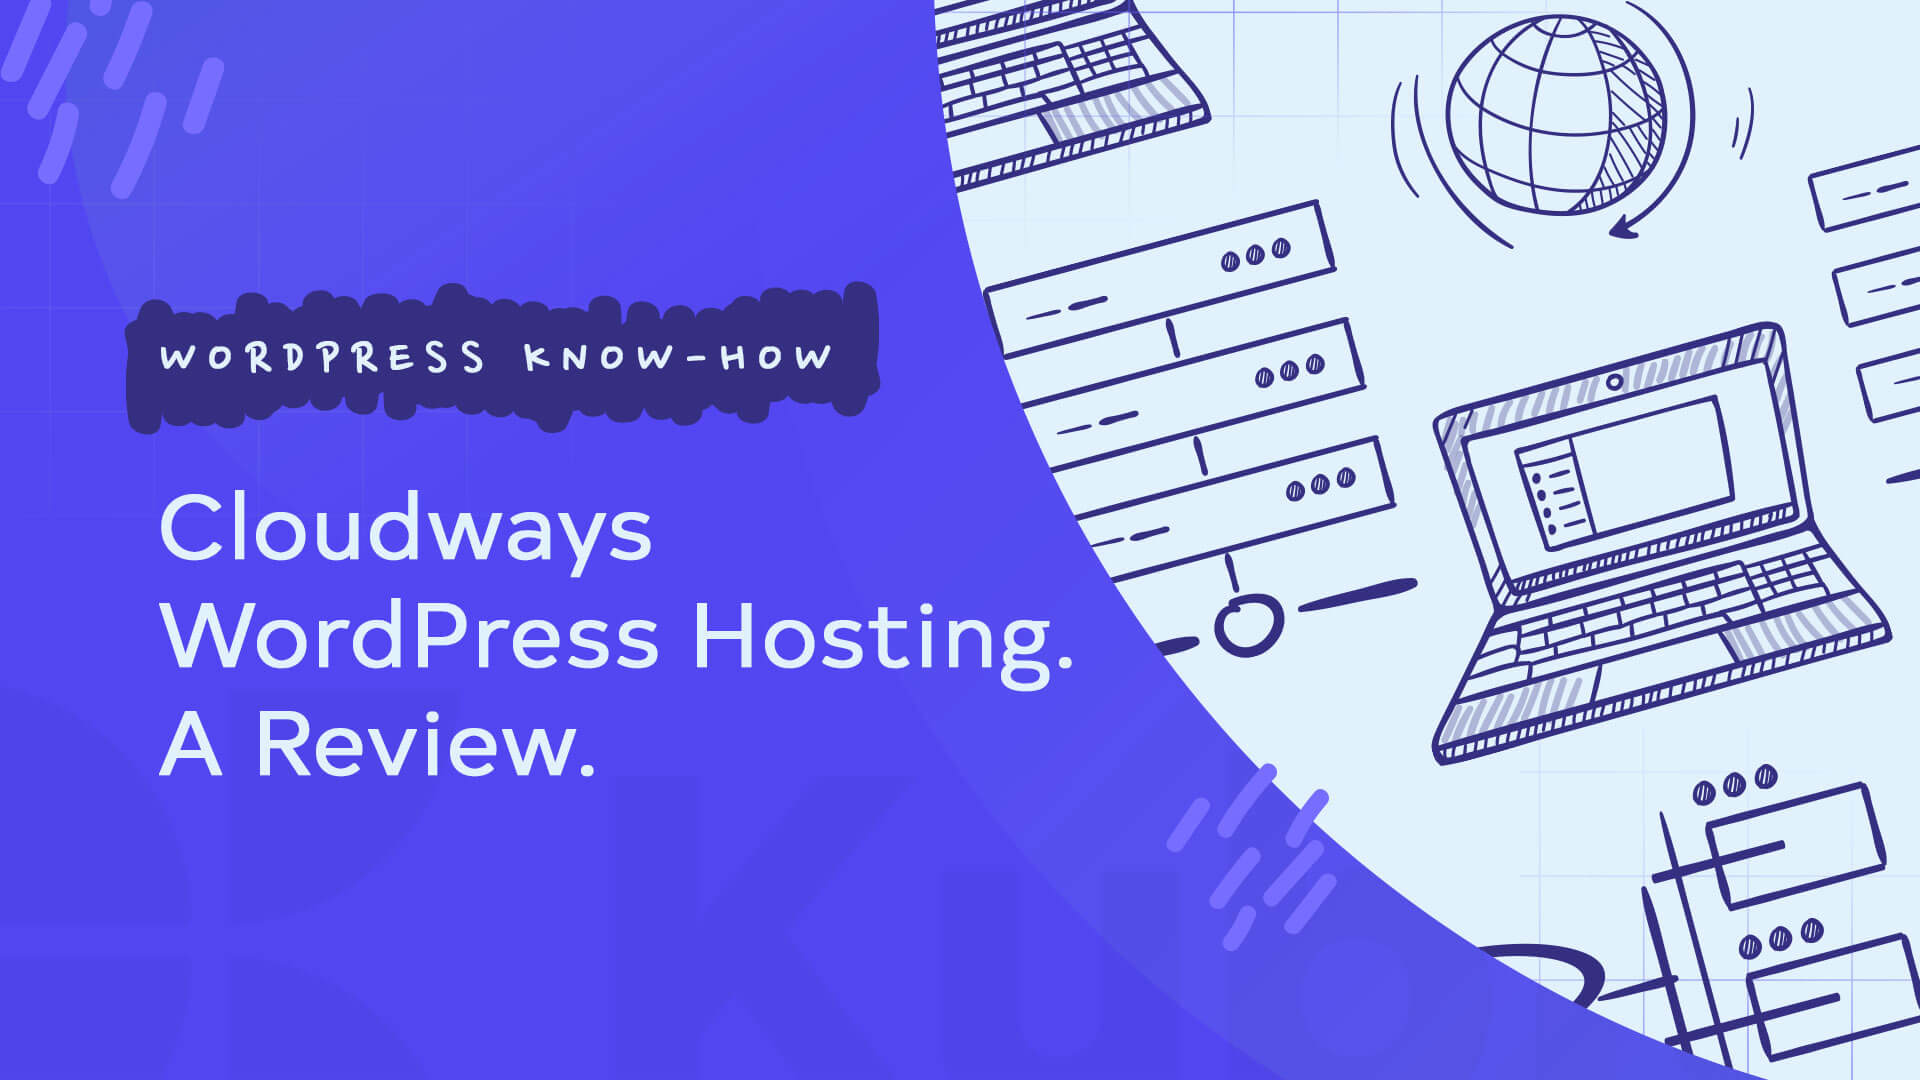 WordPress hosting by Cloudways